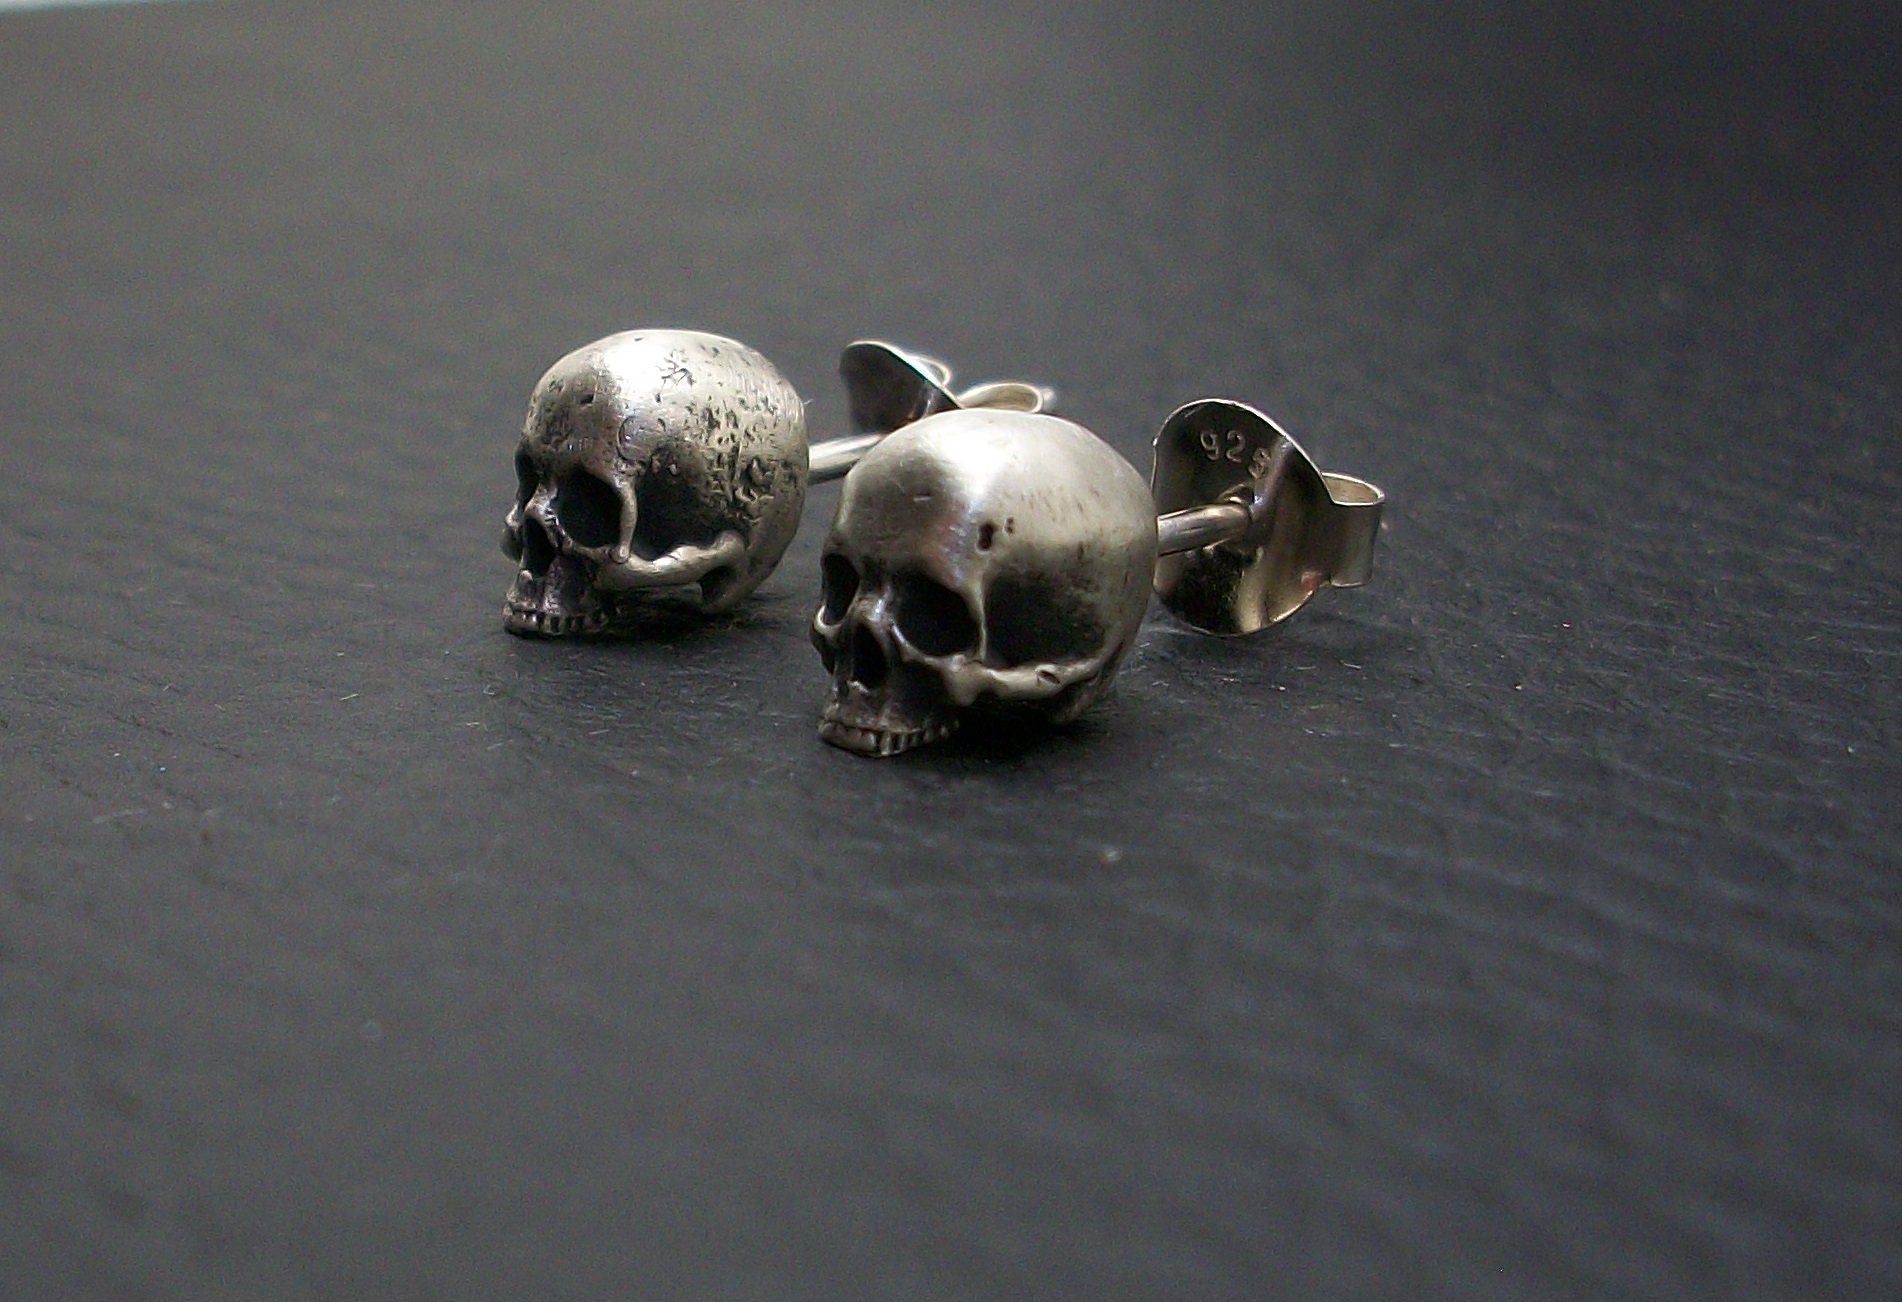 Skull Earrings - Sterling Silver Stud Skull Earrings - Love to Death Earrings (the pair)